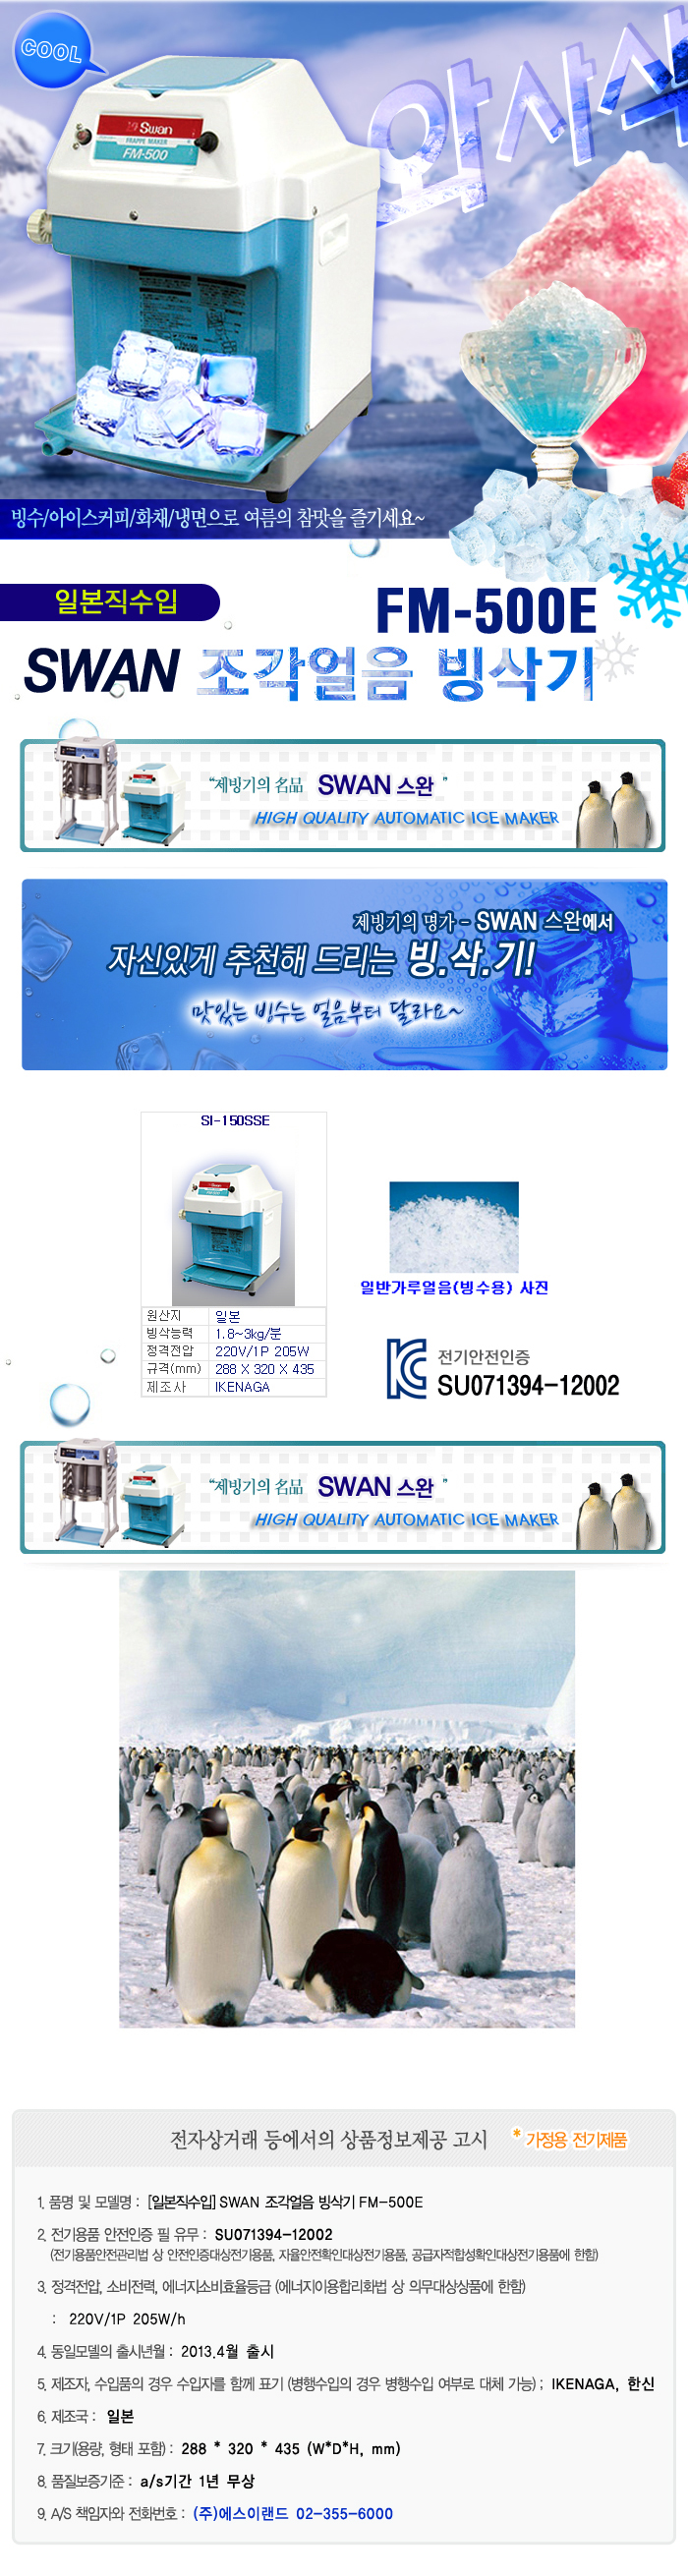 SWAN 조각얼음 빙삭기 FM-500E,일본직수입빙삭기,빙삭기,제빙기,팥빙수기계,팥빙수기,빙수기,빙수기계,얼음